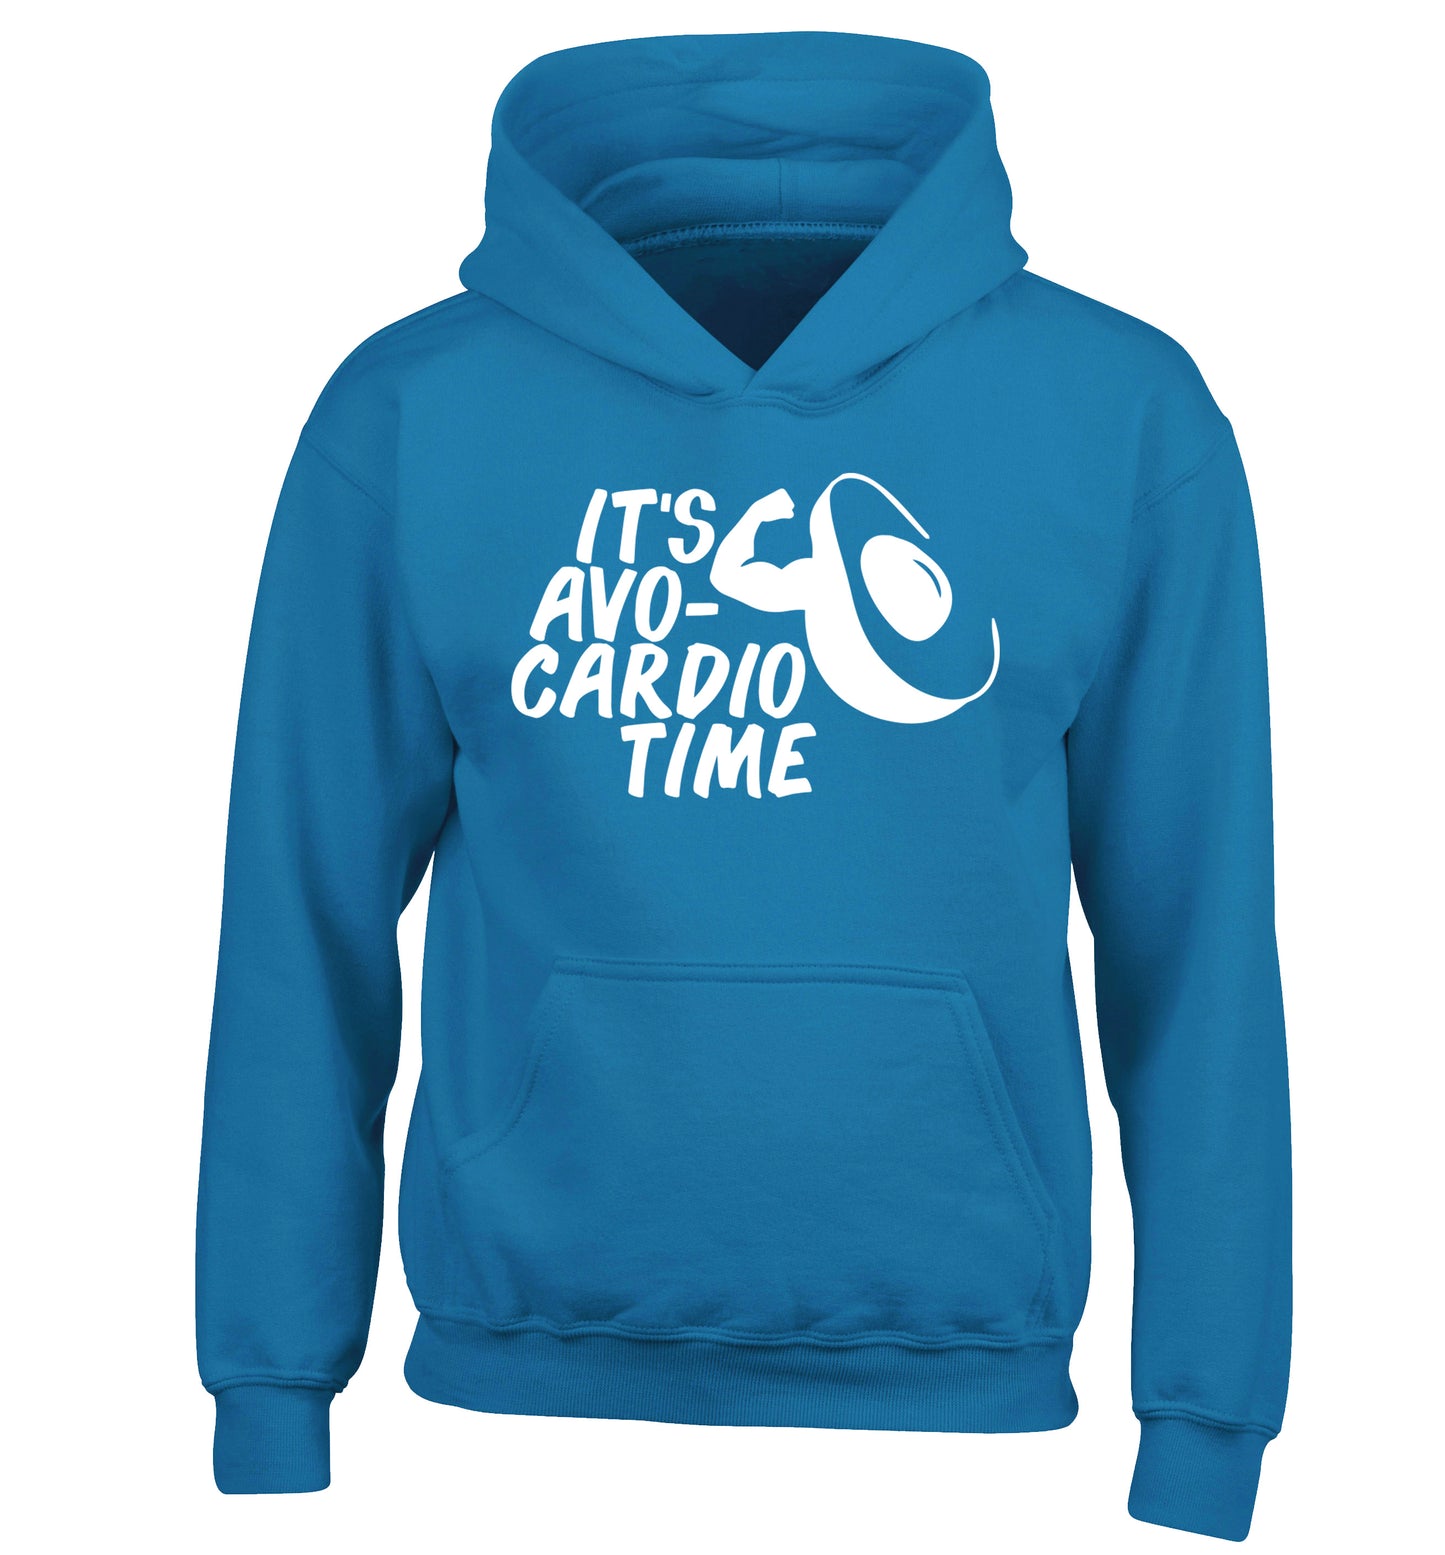 It's avo-cardio time children's blue hoodie 12-14 Years